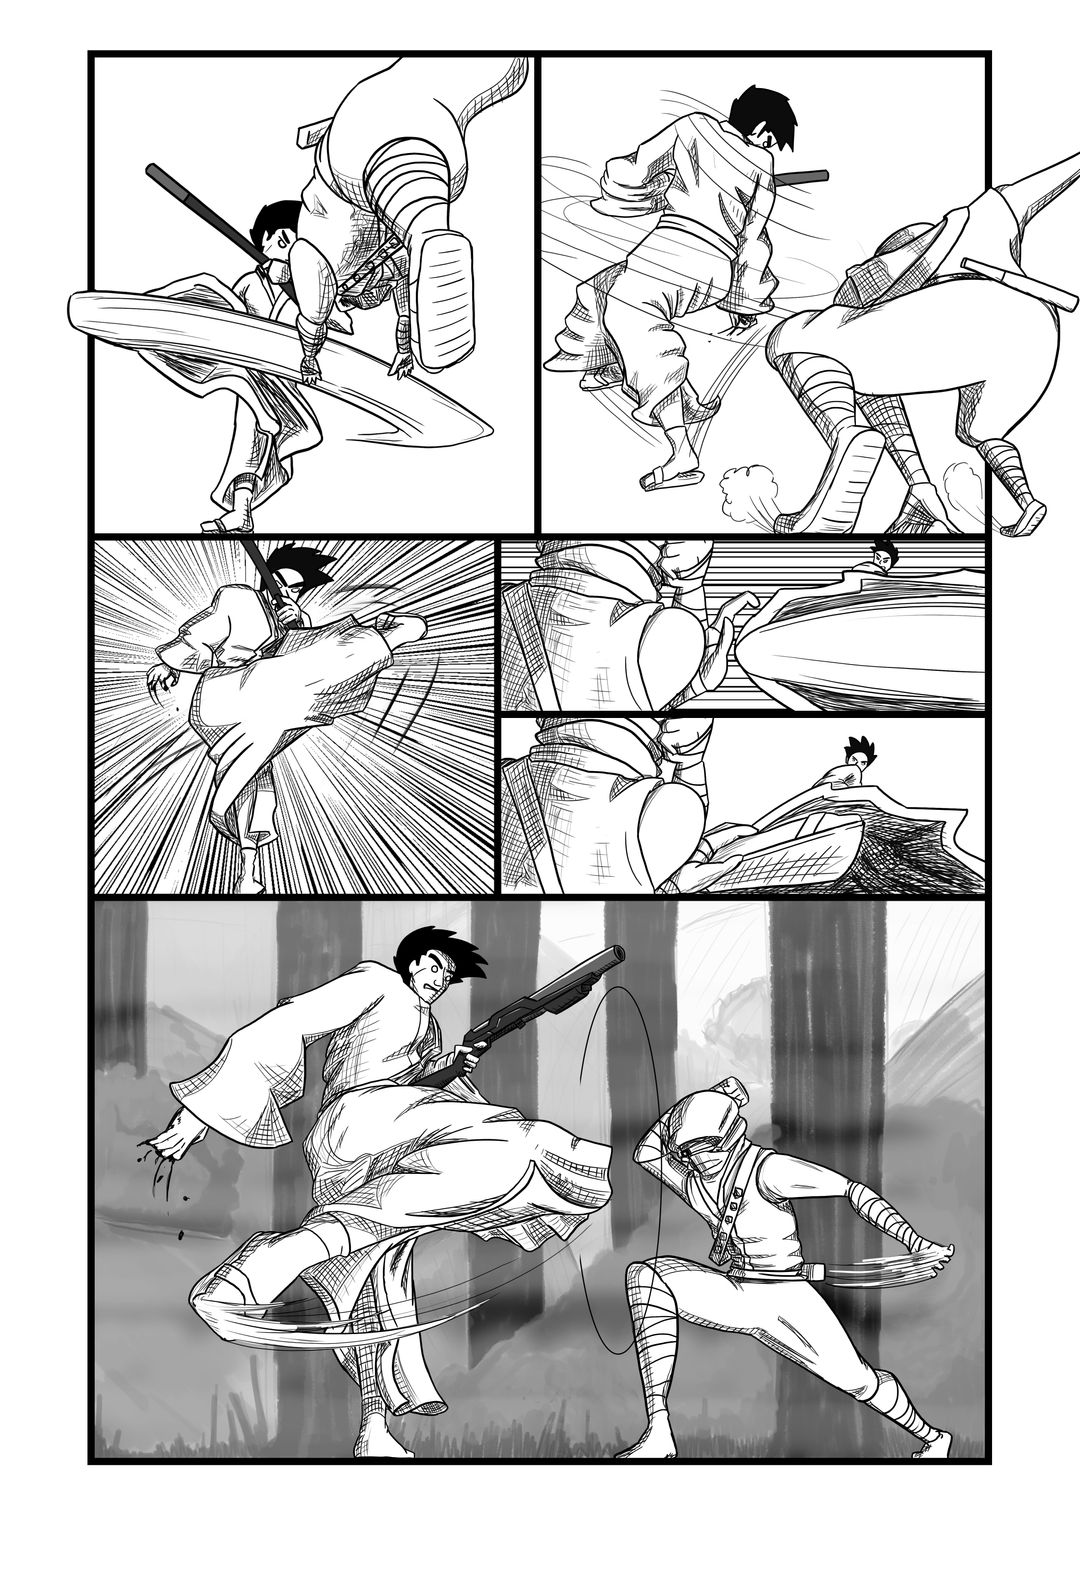 Shotgun Samurai 15 panel 5